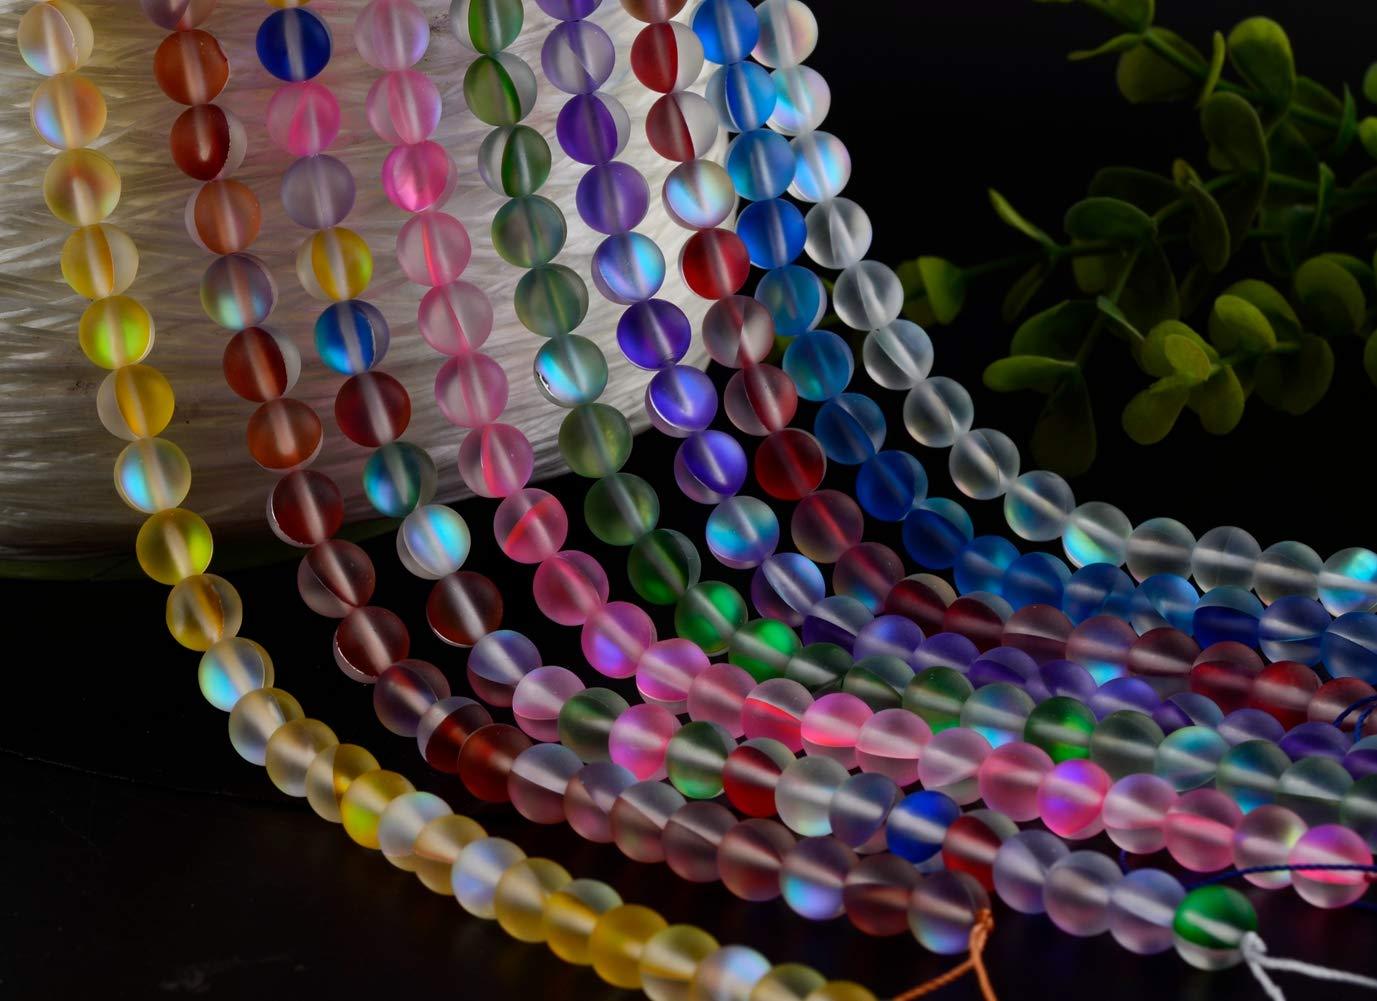 Matte Holographic Quartz 8mm, Glass Beads Online - Dearbeads